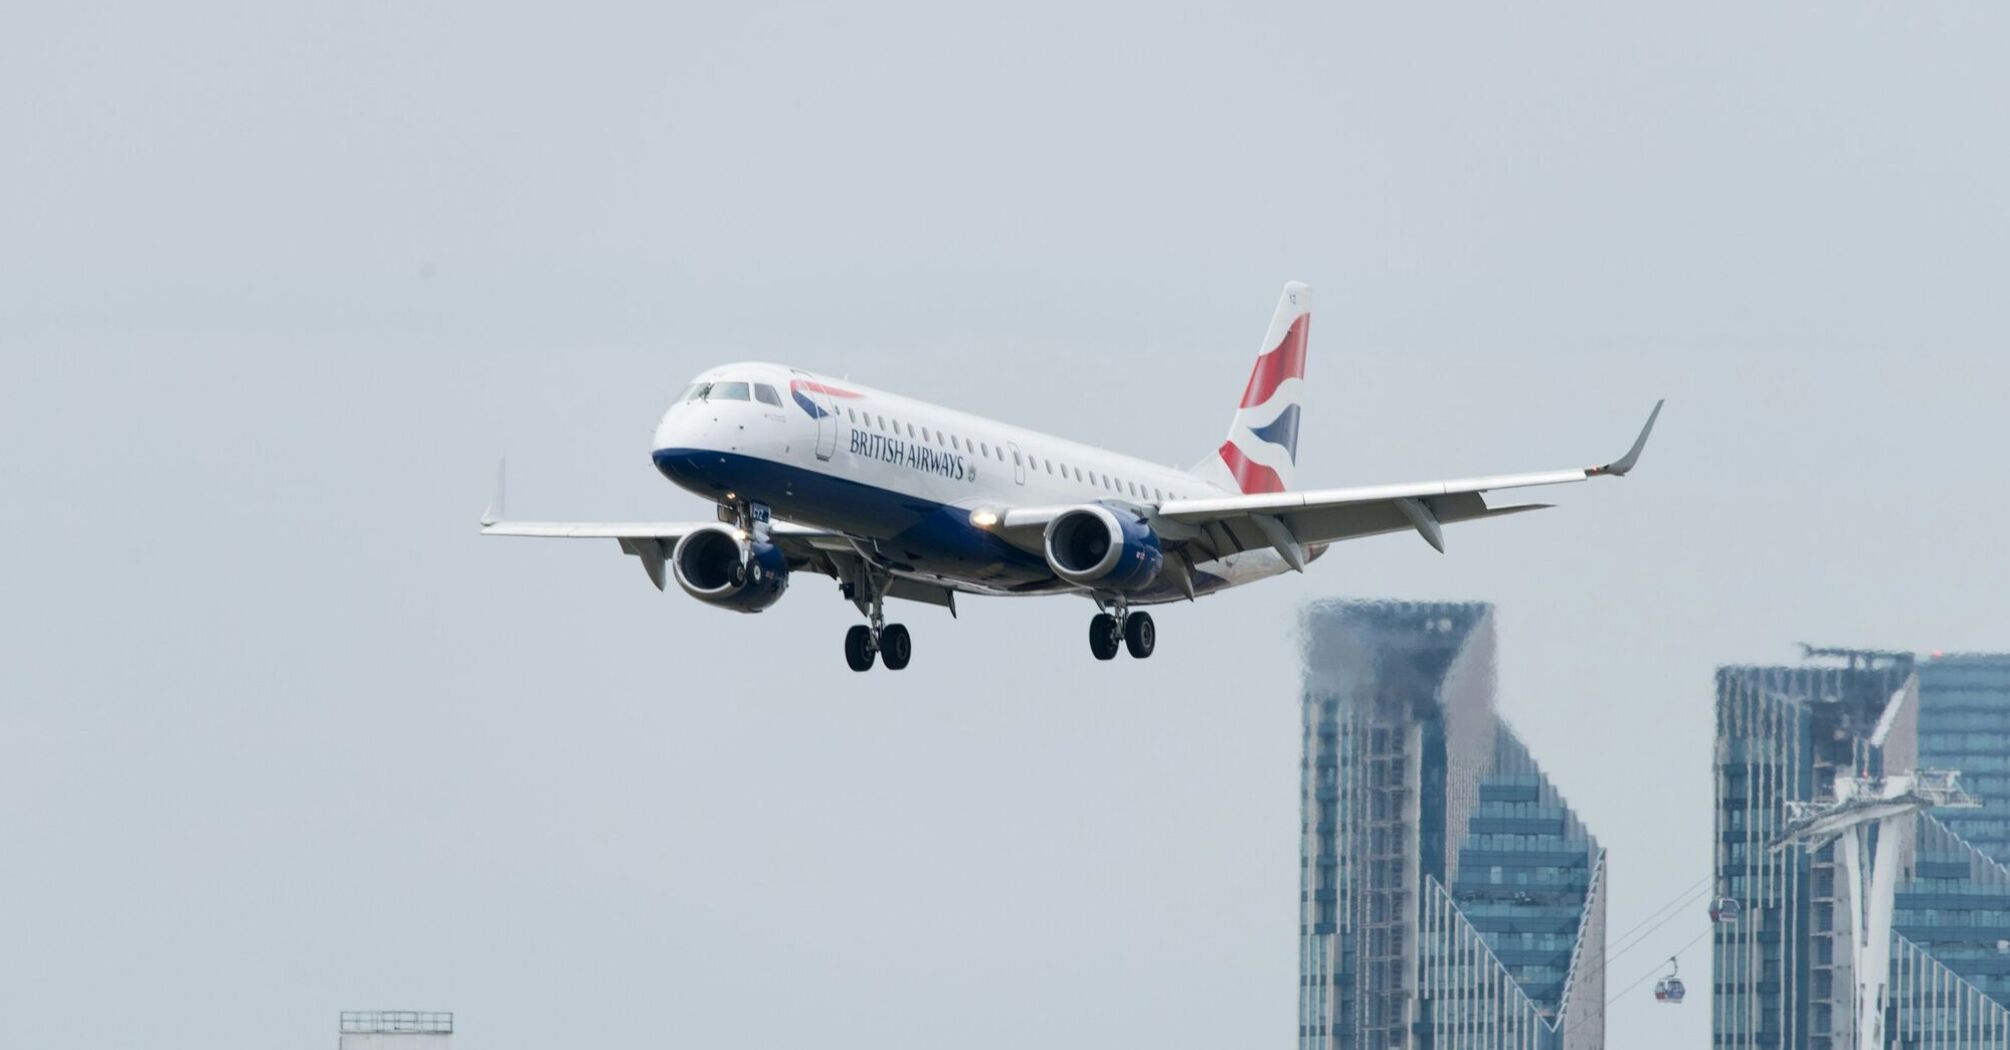 British Airways plane landing at an airport